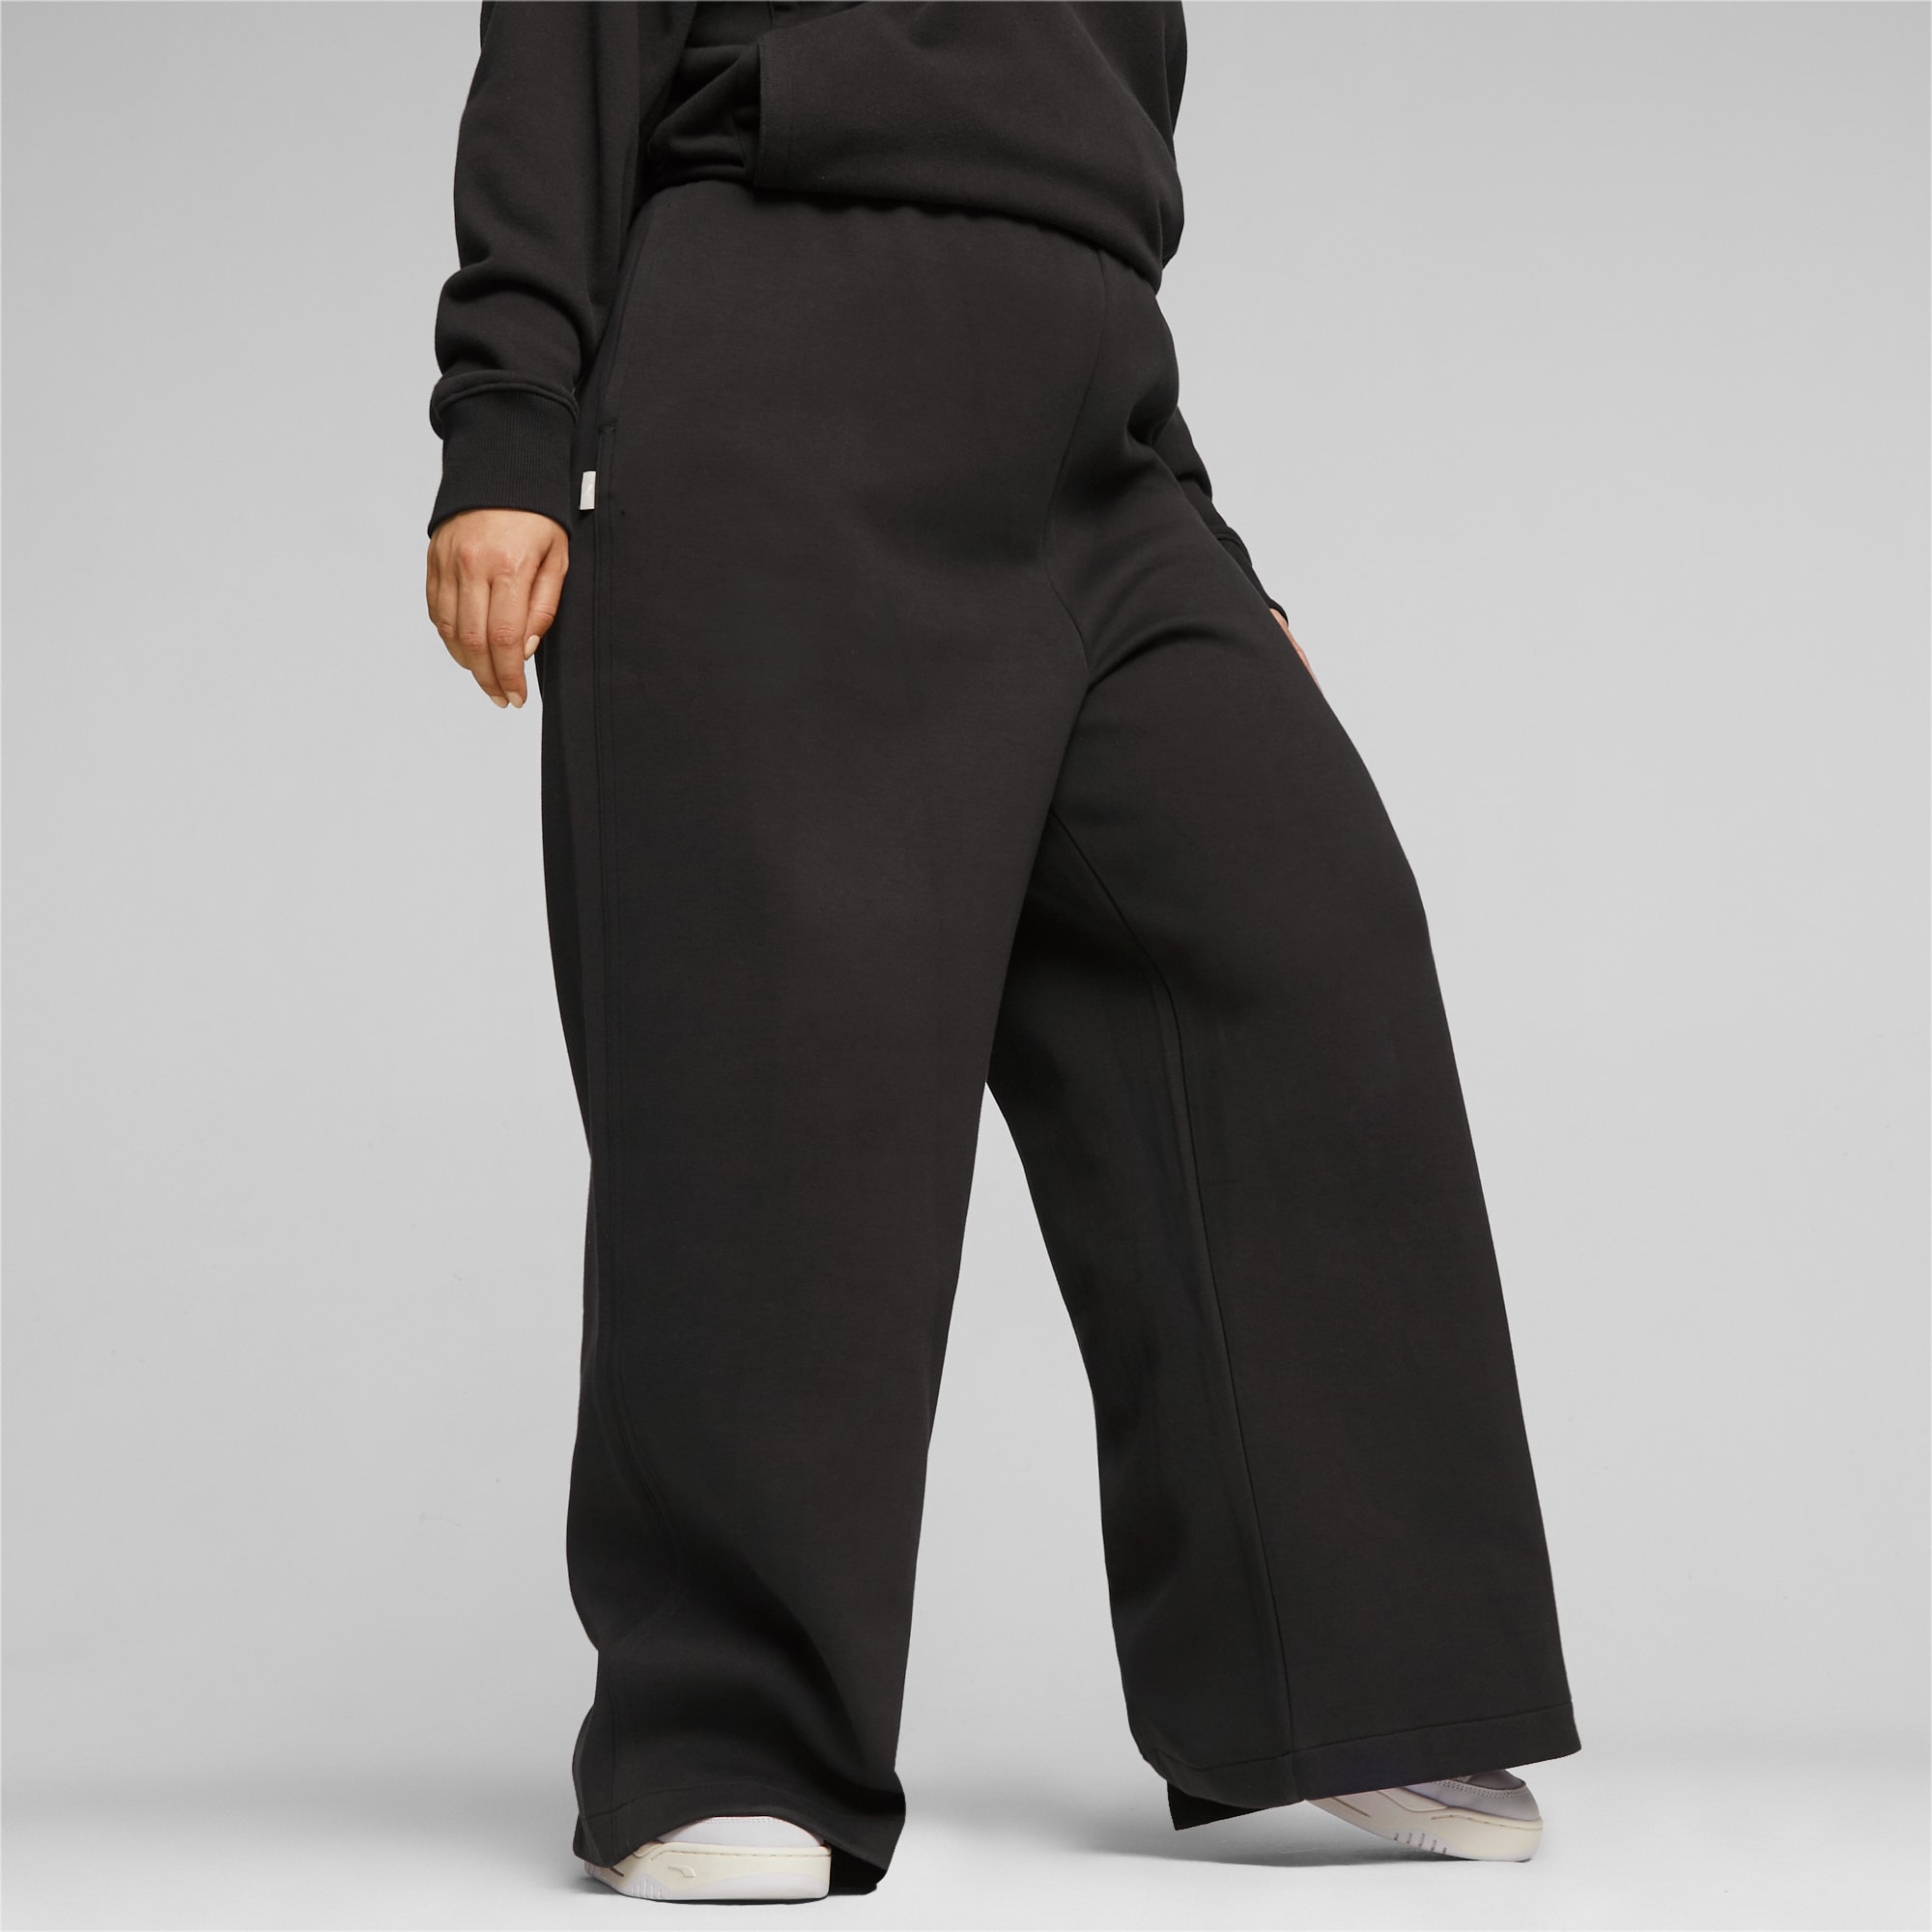 PUMA Pantalon Large Infuse Femme, Noir